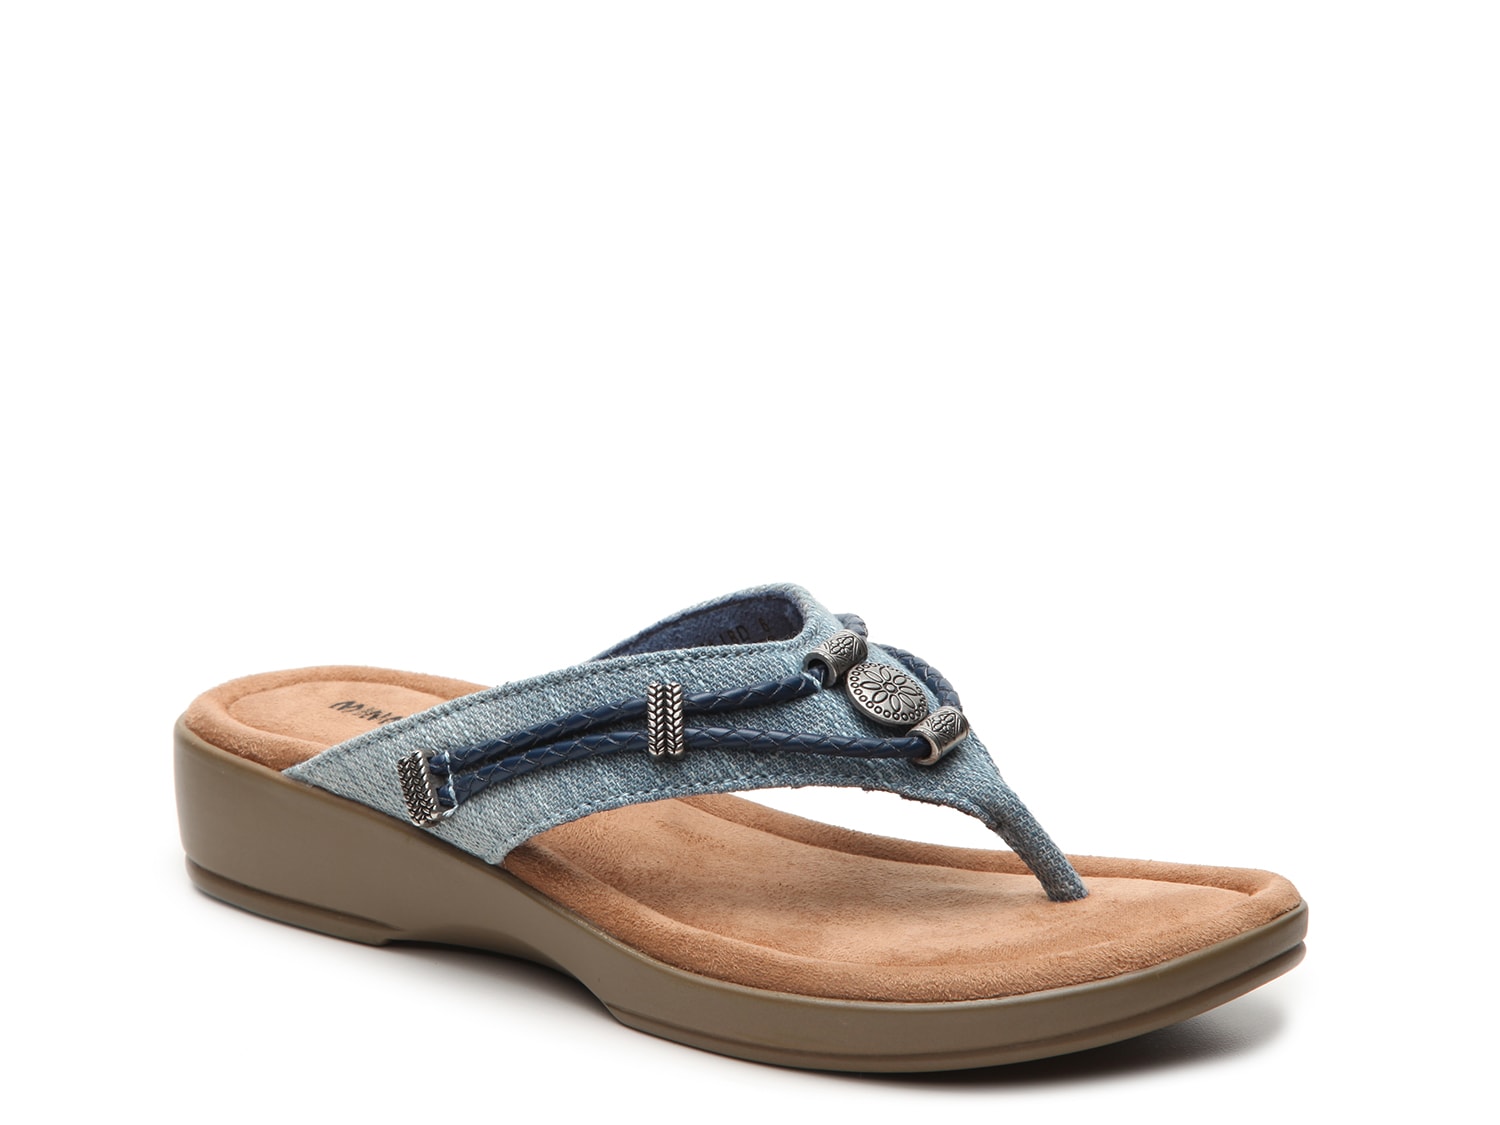 minnetonka silverthorne wedge sandal